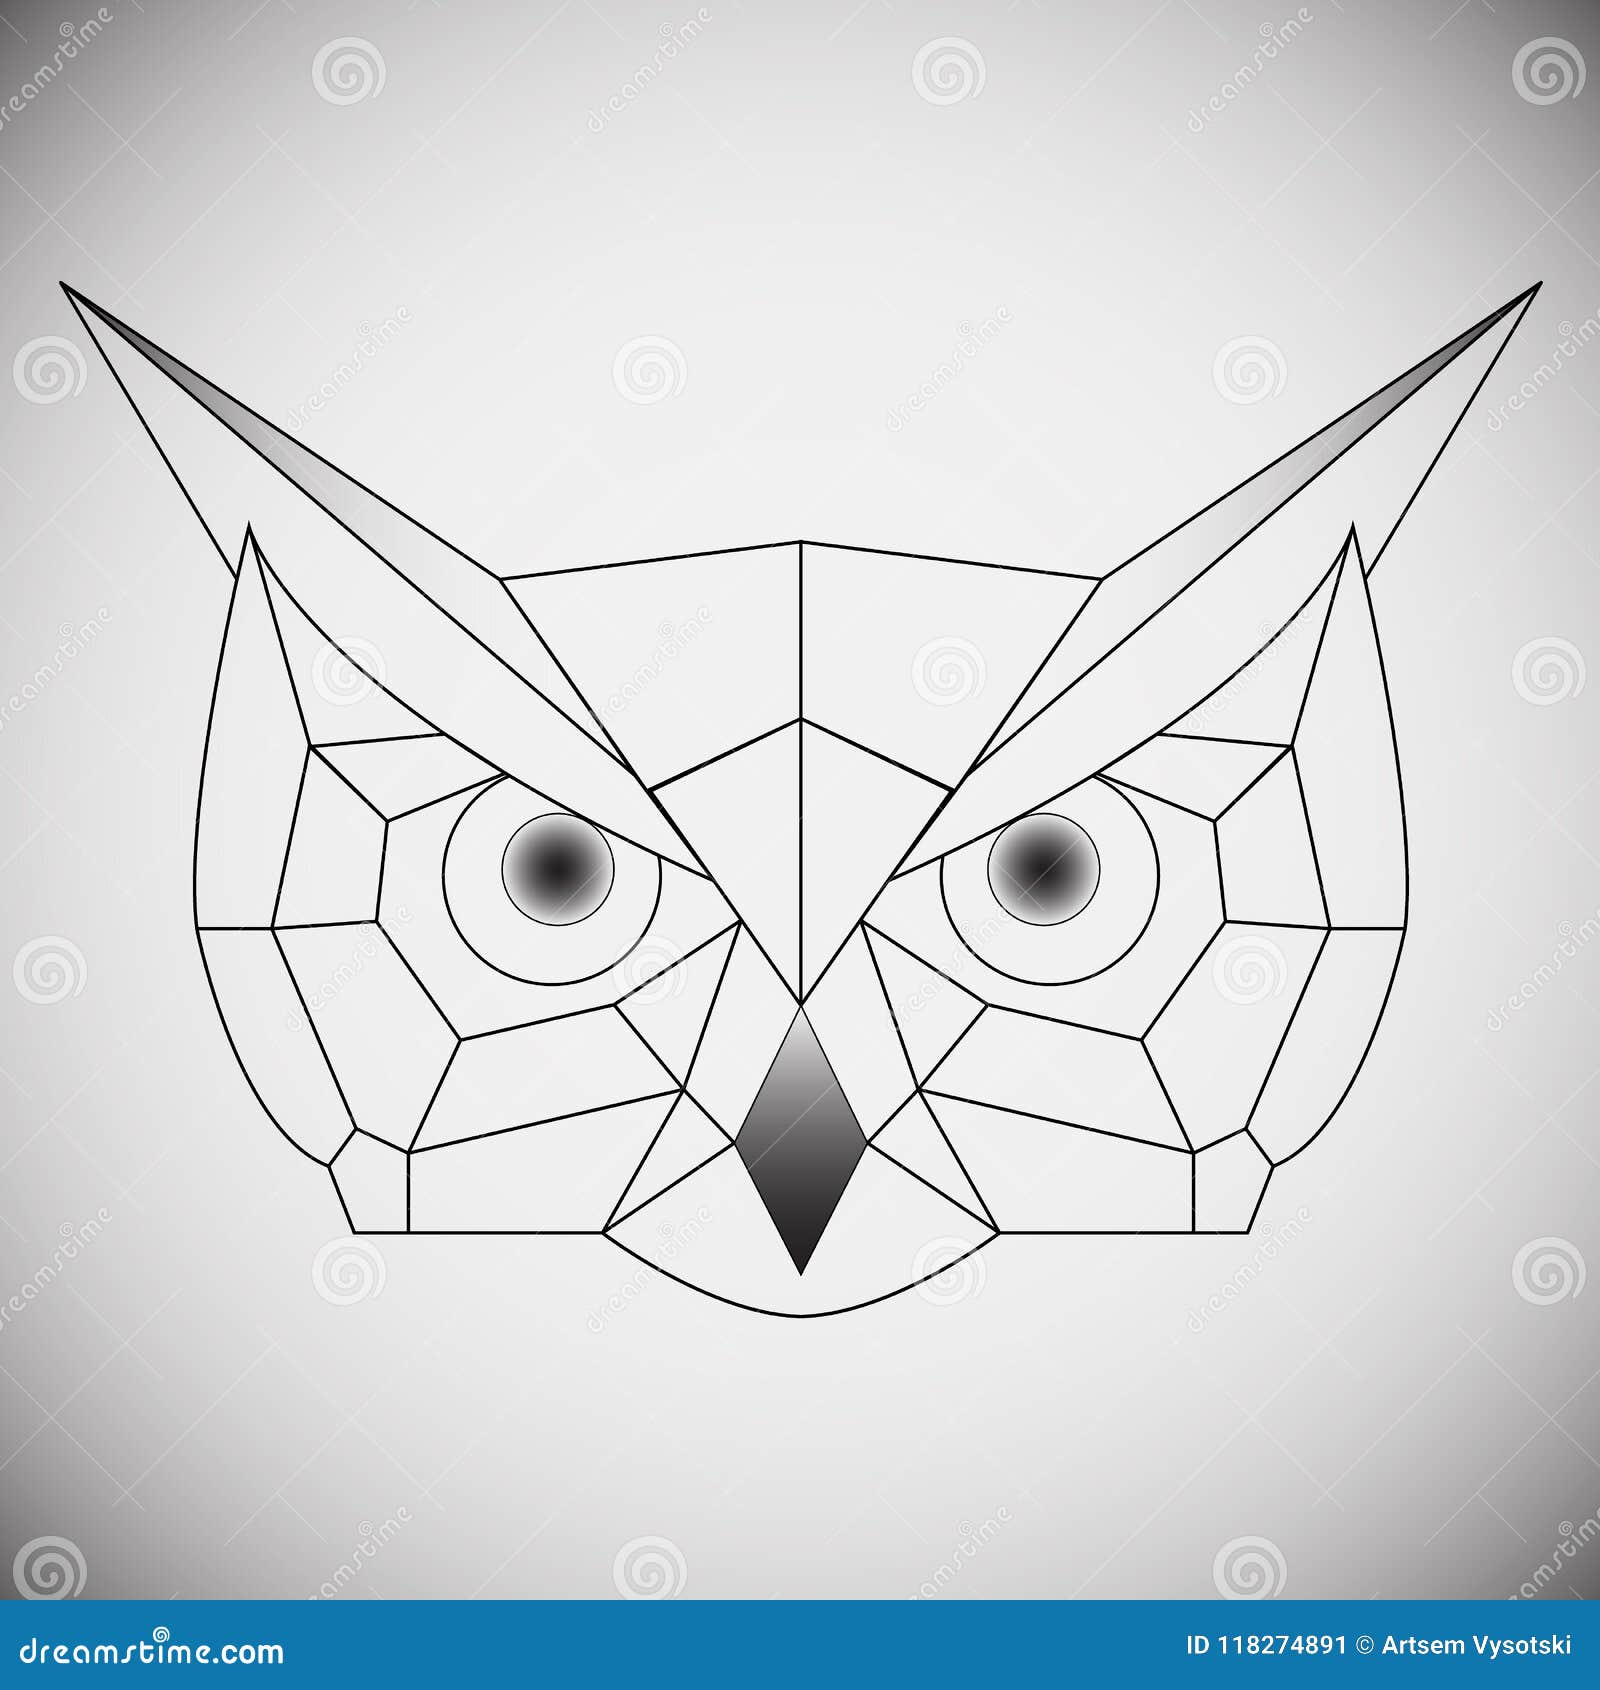 Details 91 about geometric owl tattoo unmissable  indaotaonec